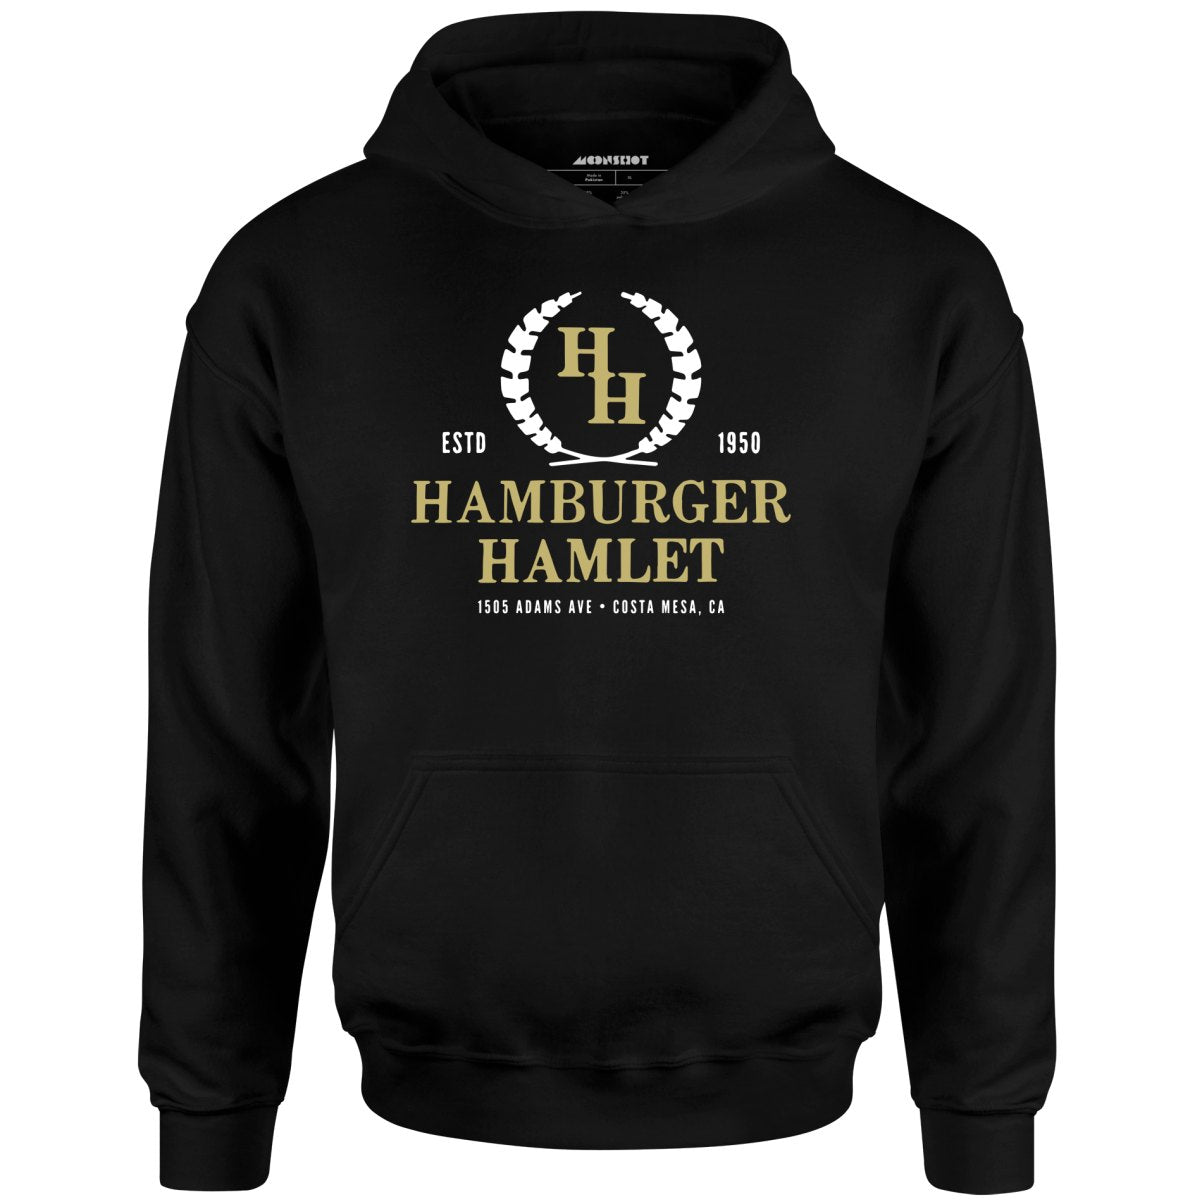 Hamburger Hamlet - Costa Mesa, CA - Vintage Restaurant - Unisex Hoodie